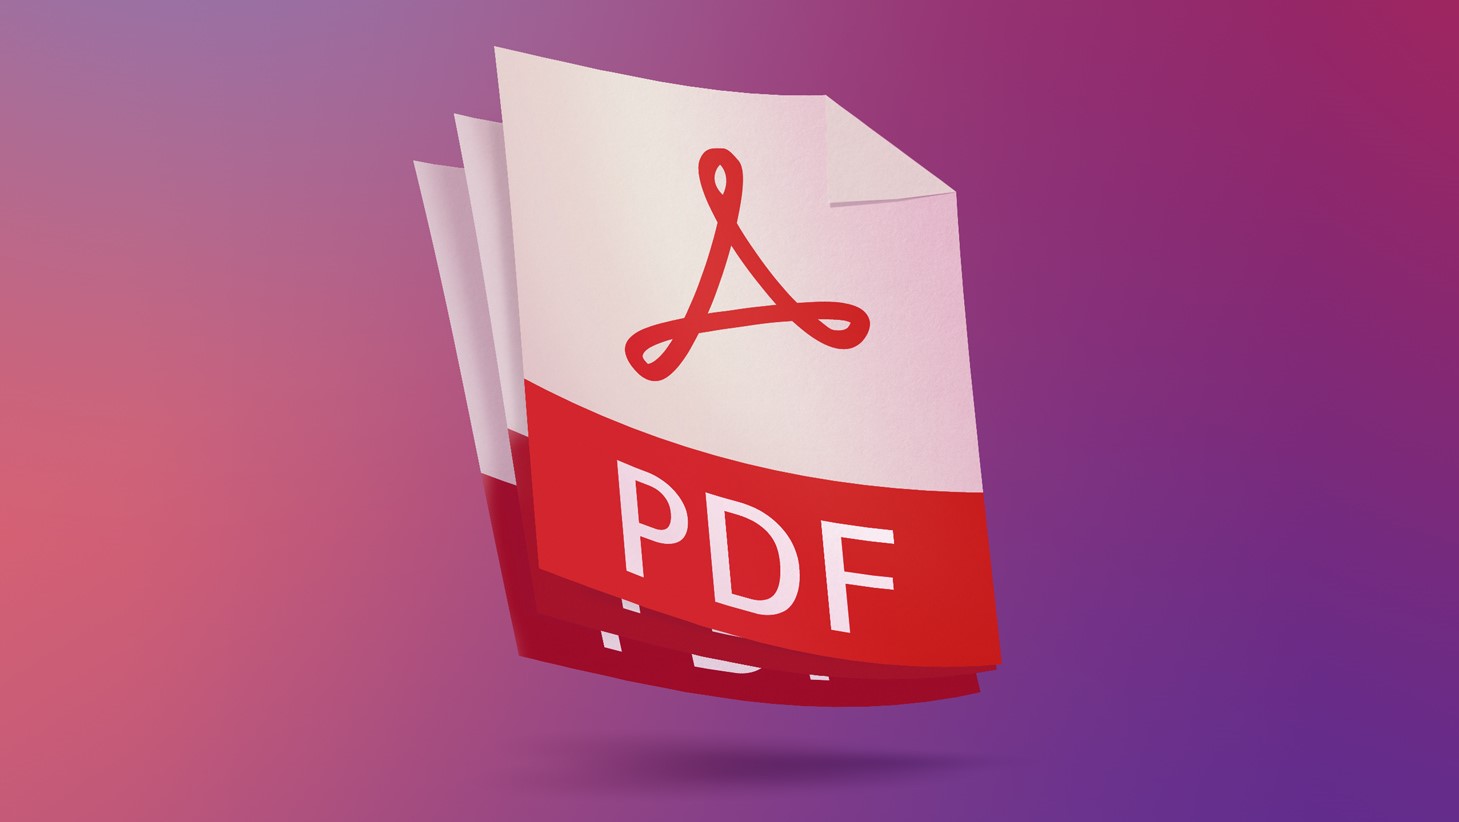 free pdf size reducer app windows store